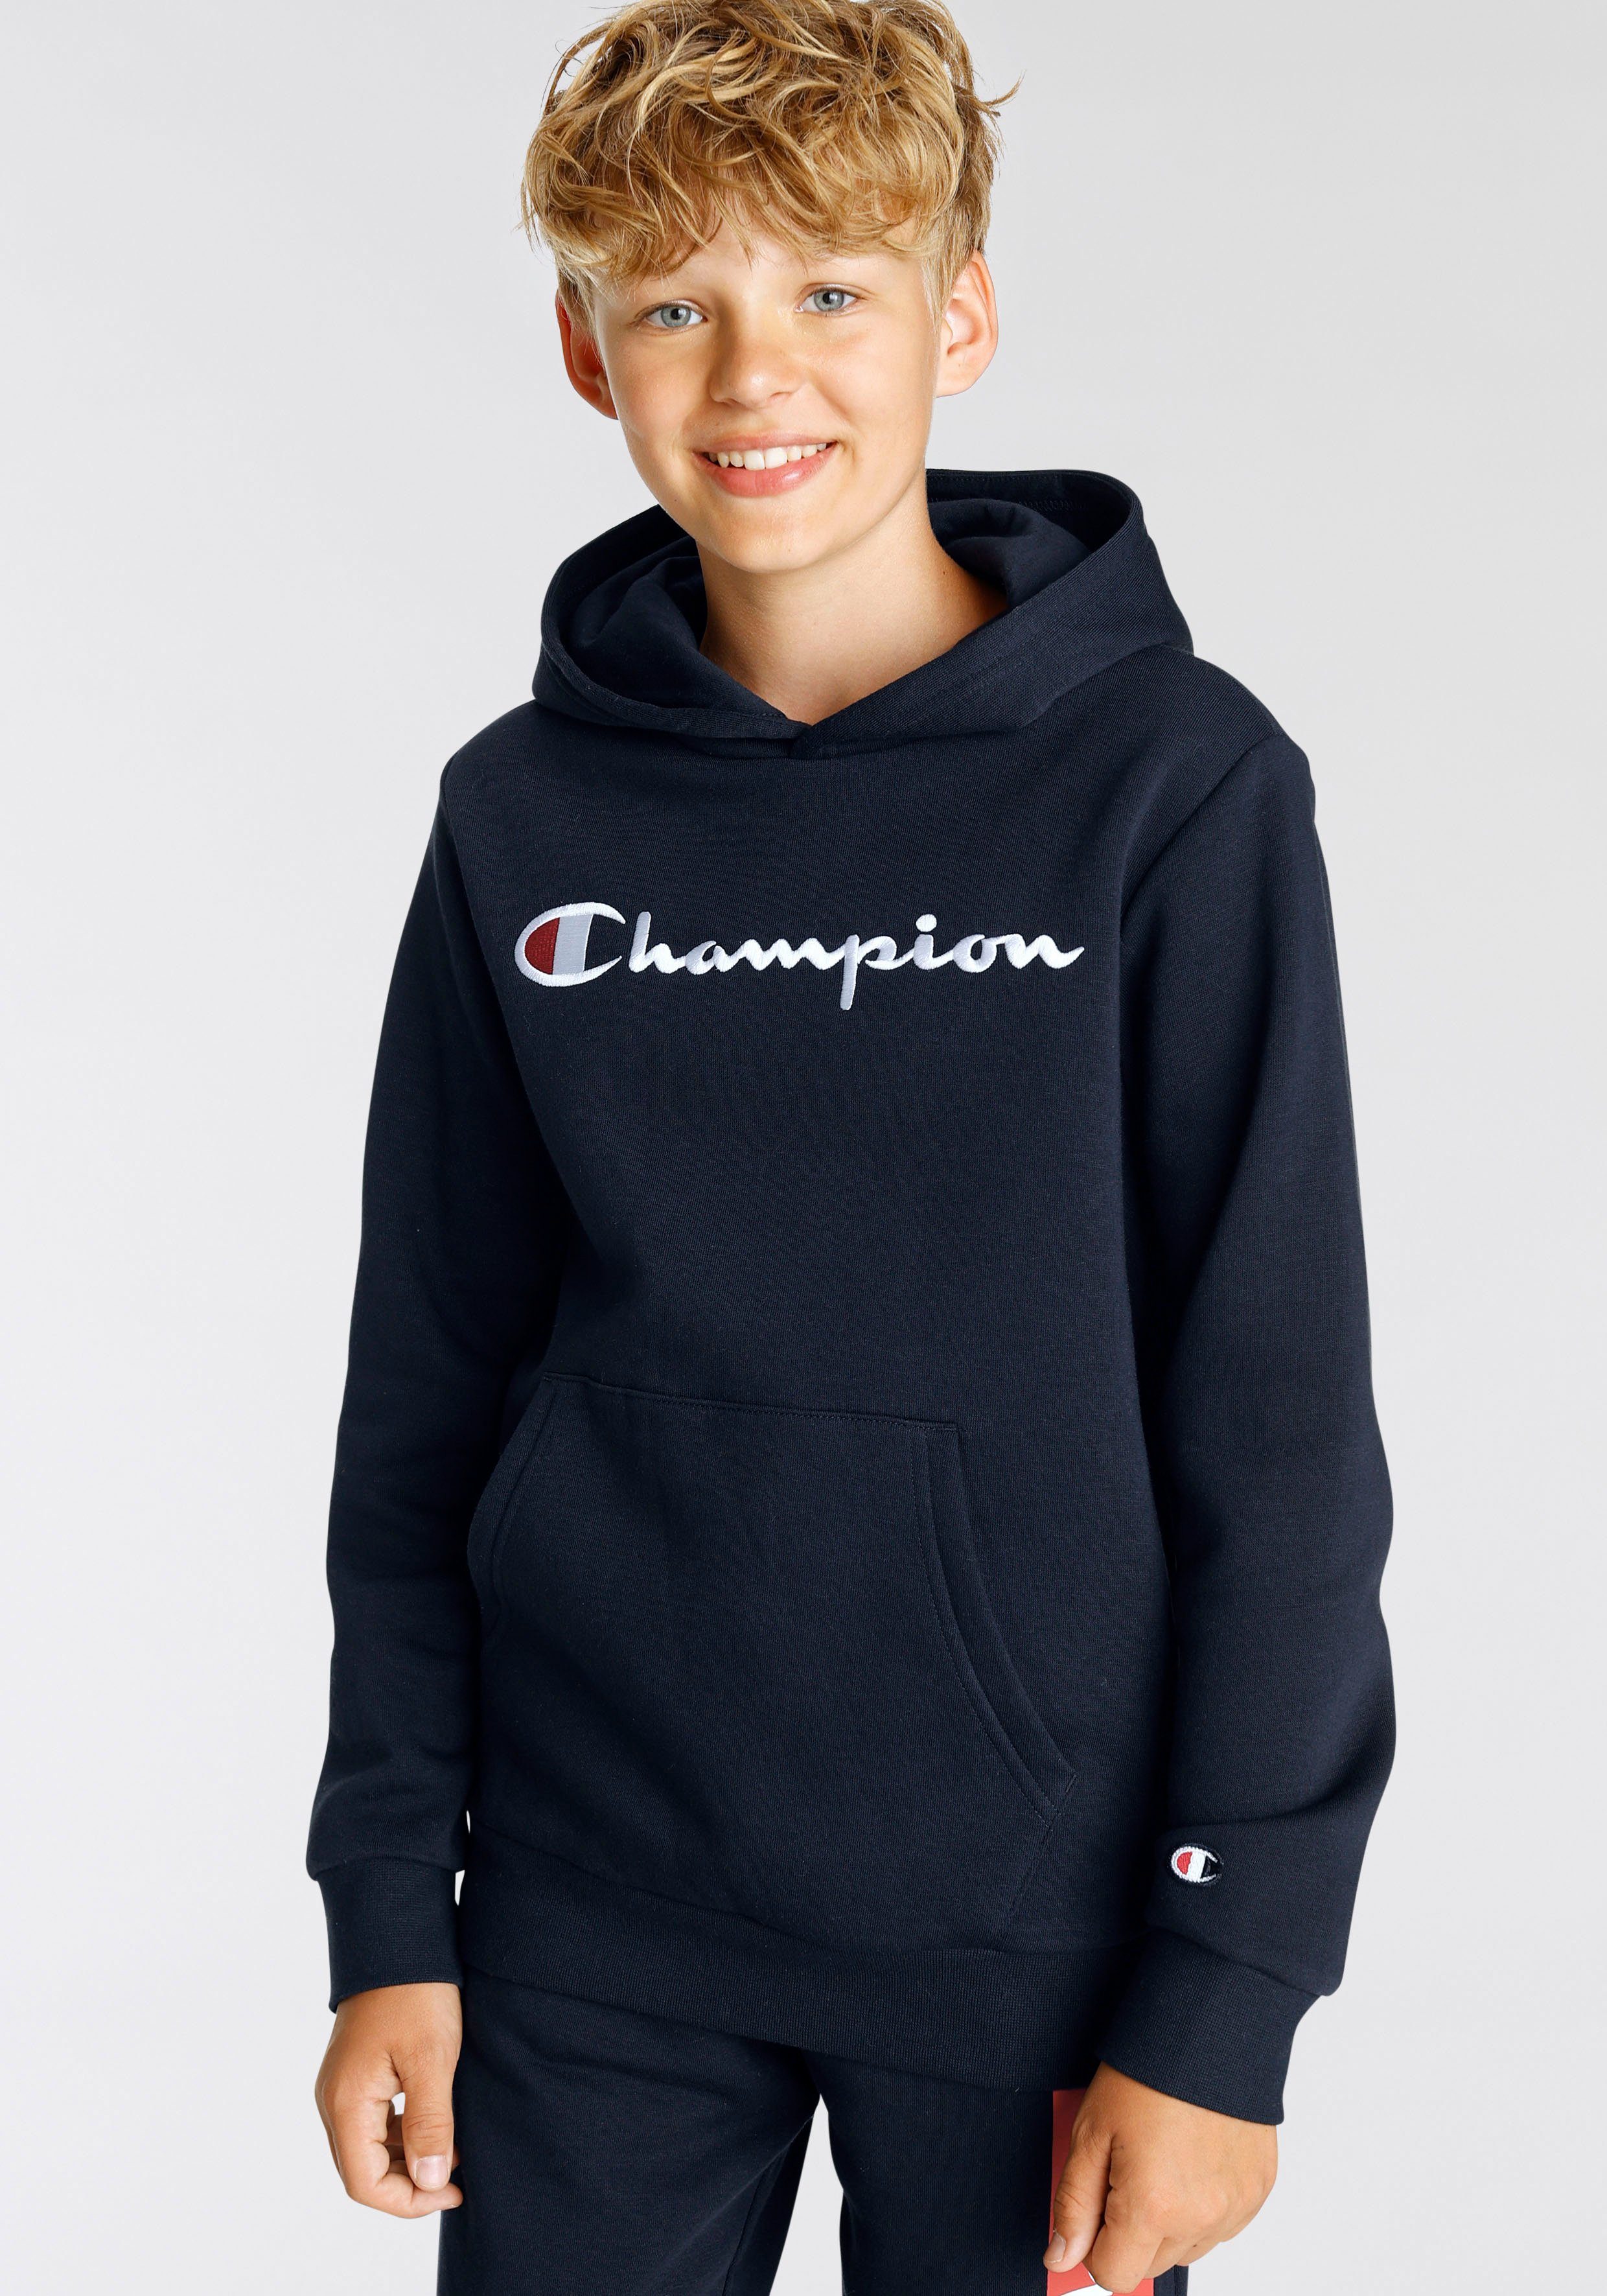 Logo Sweatshirt Classic Kinder Champion für marine Hooded Sweatshirt large -